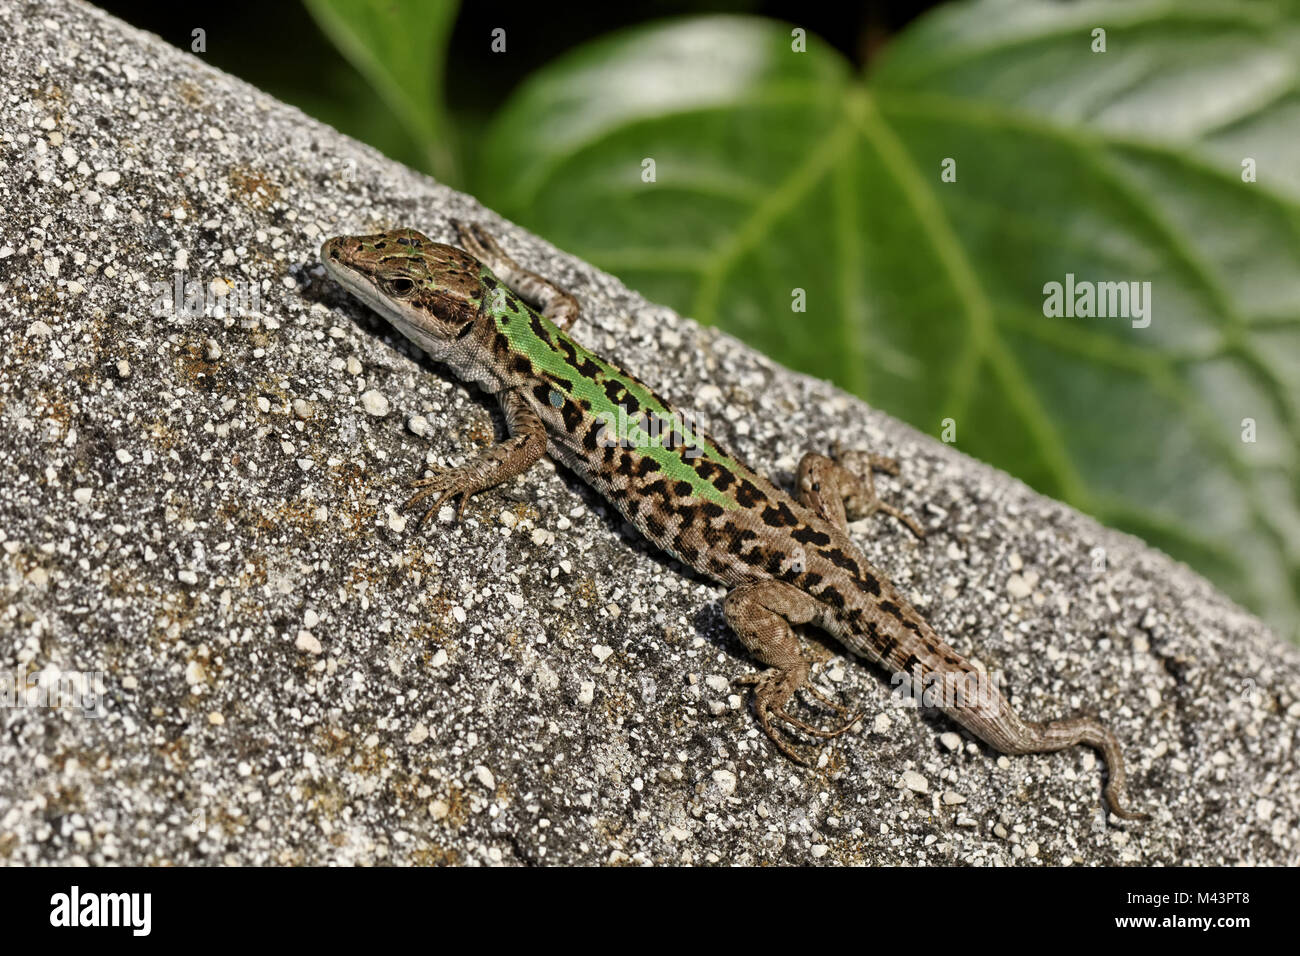 Podarcis sicula, Italian Wall Lizard, Ruin Lizard Stock Photo